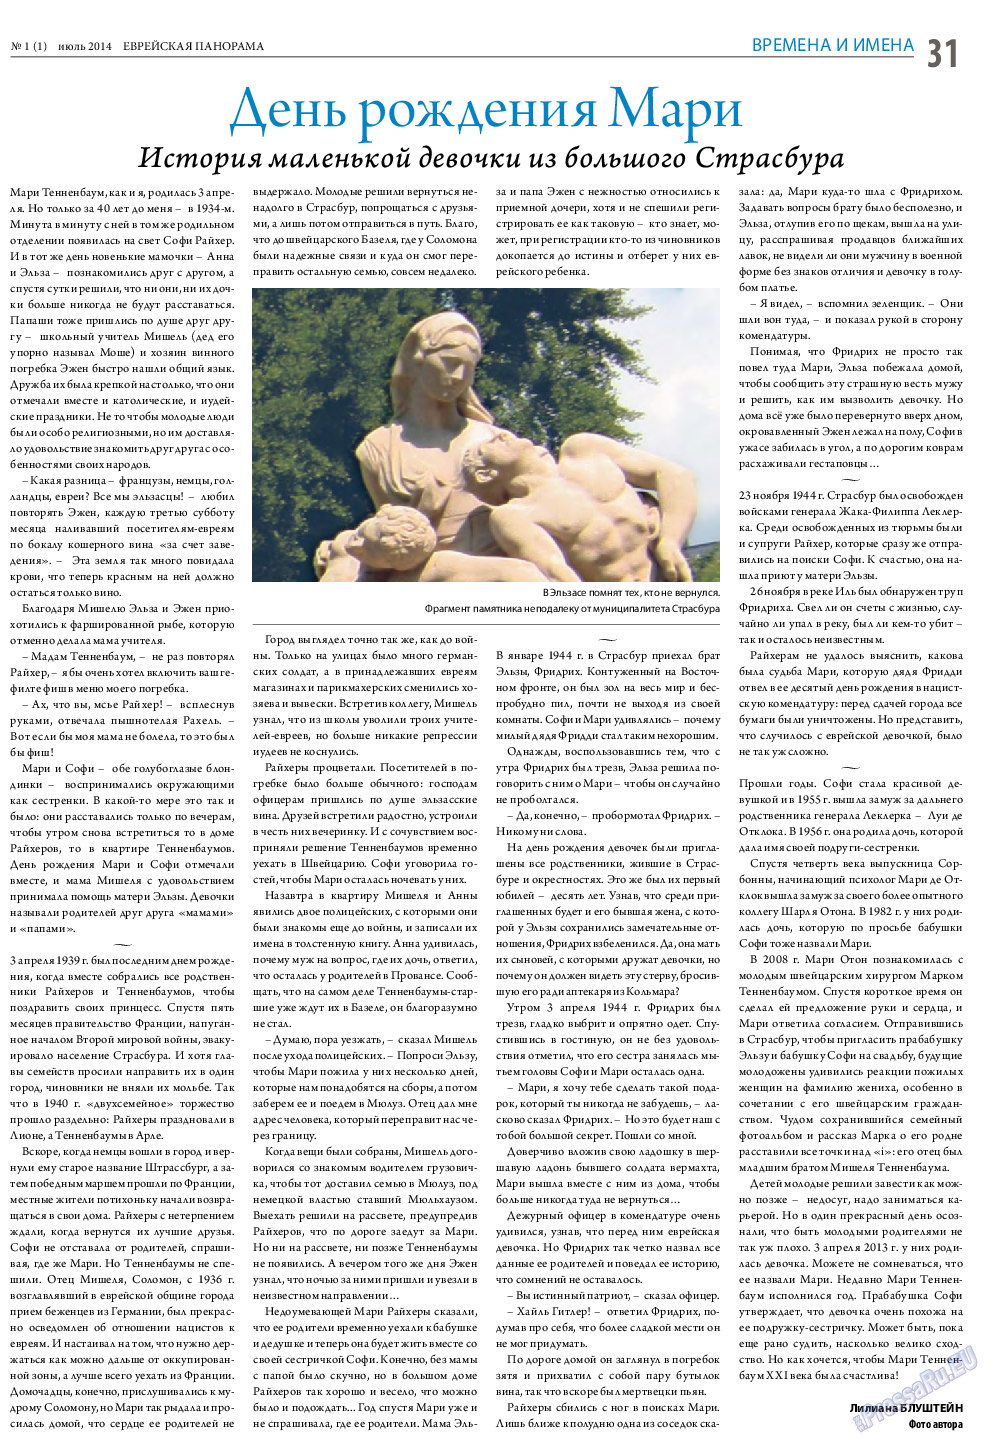 Еврейская панорама, газета. 2014 №1 стр.31